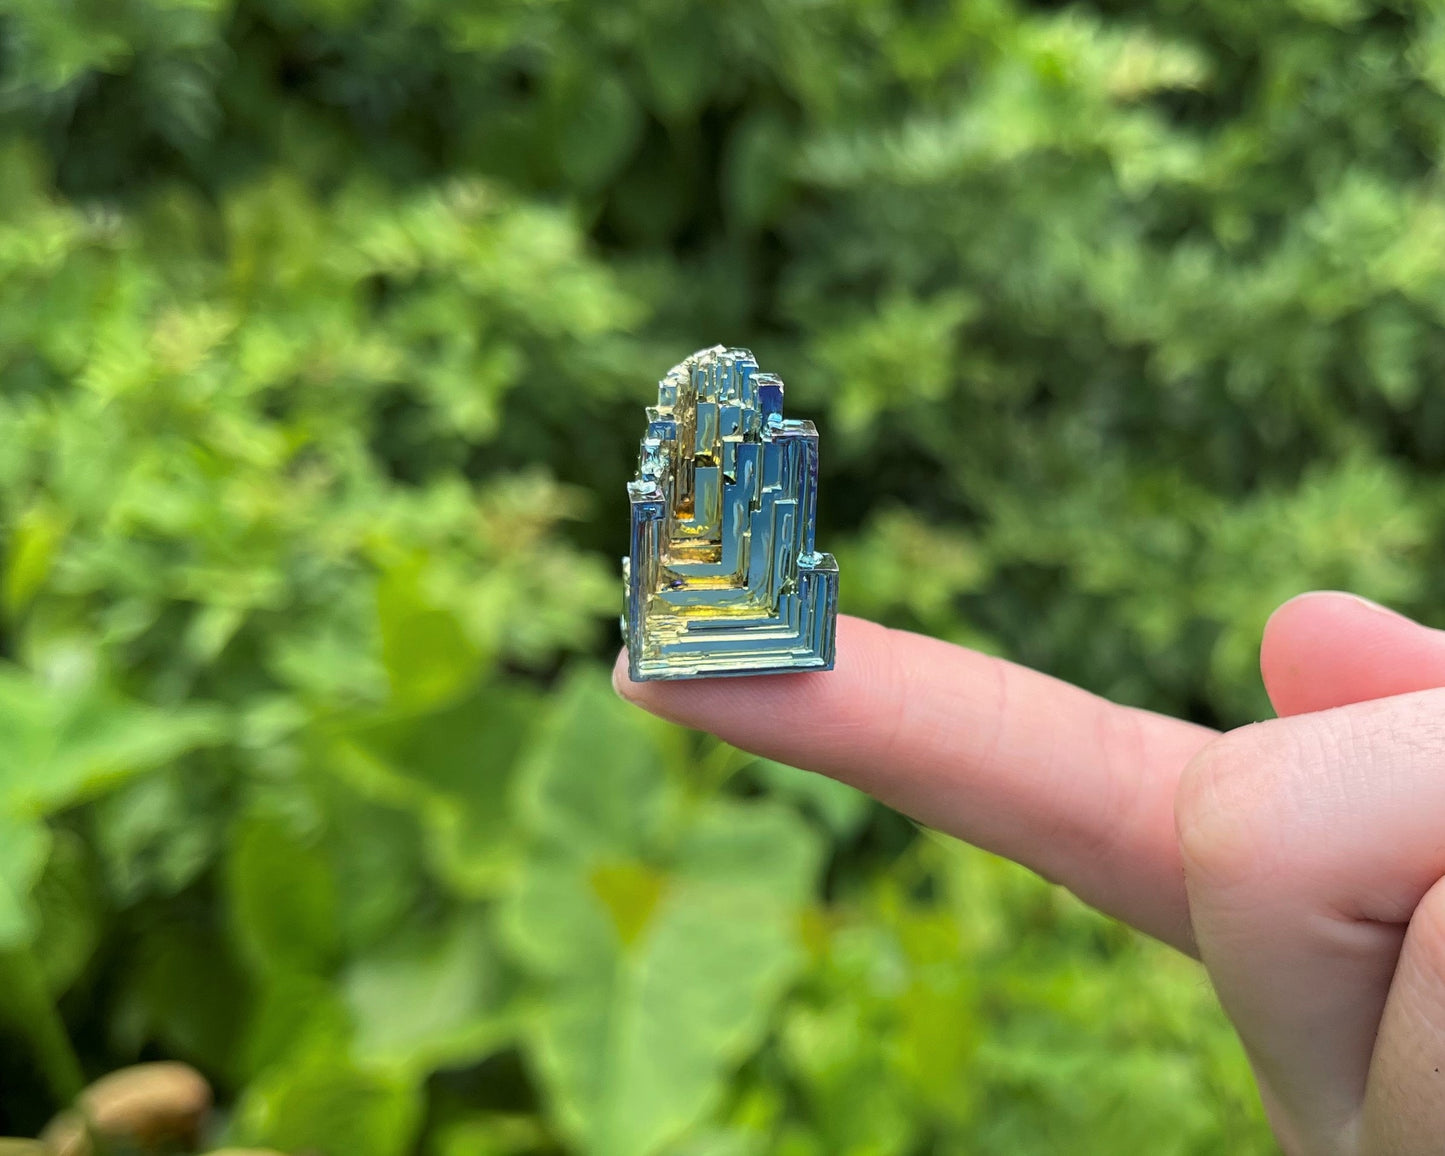 Mini Bismuth Crystals